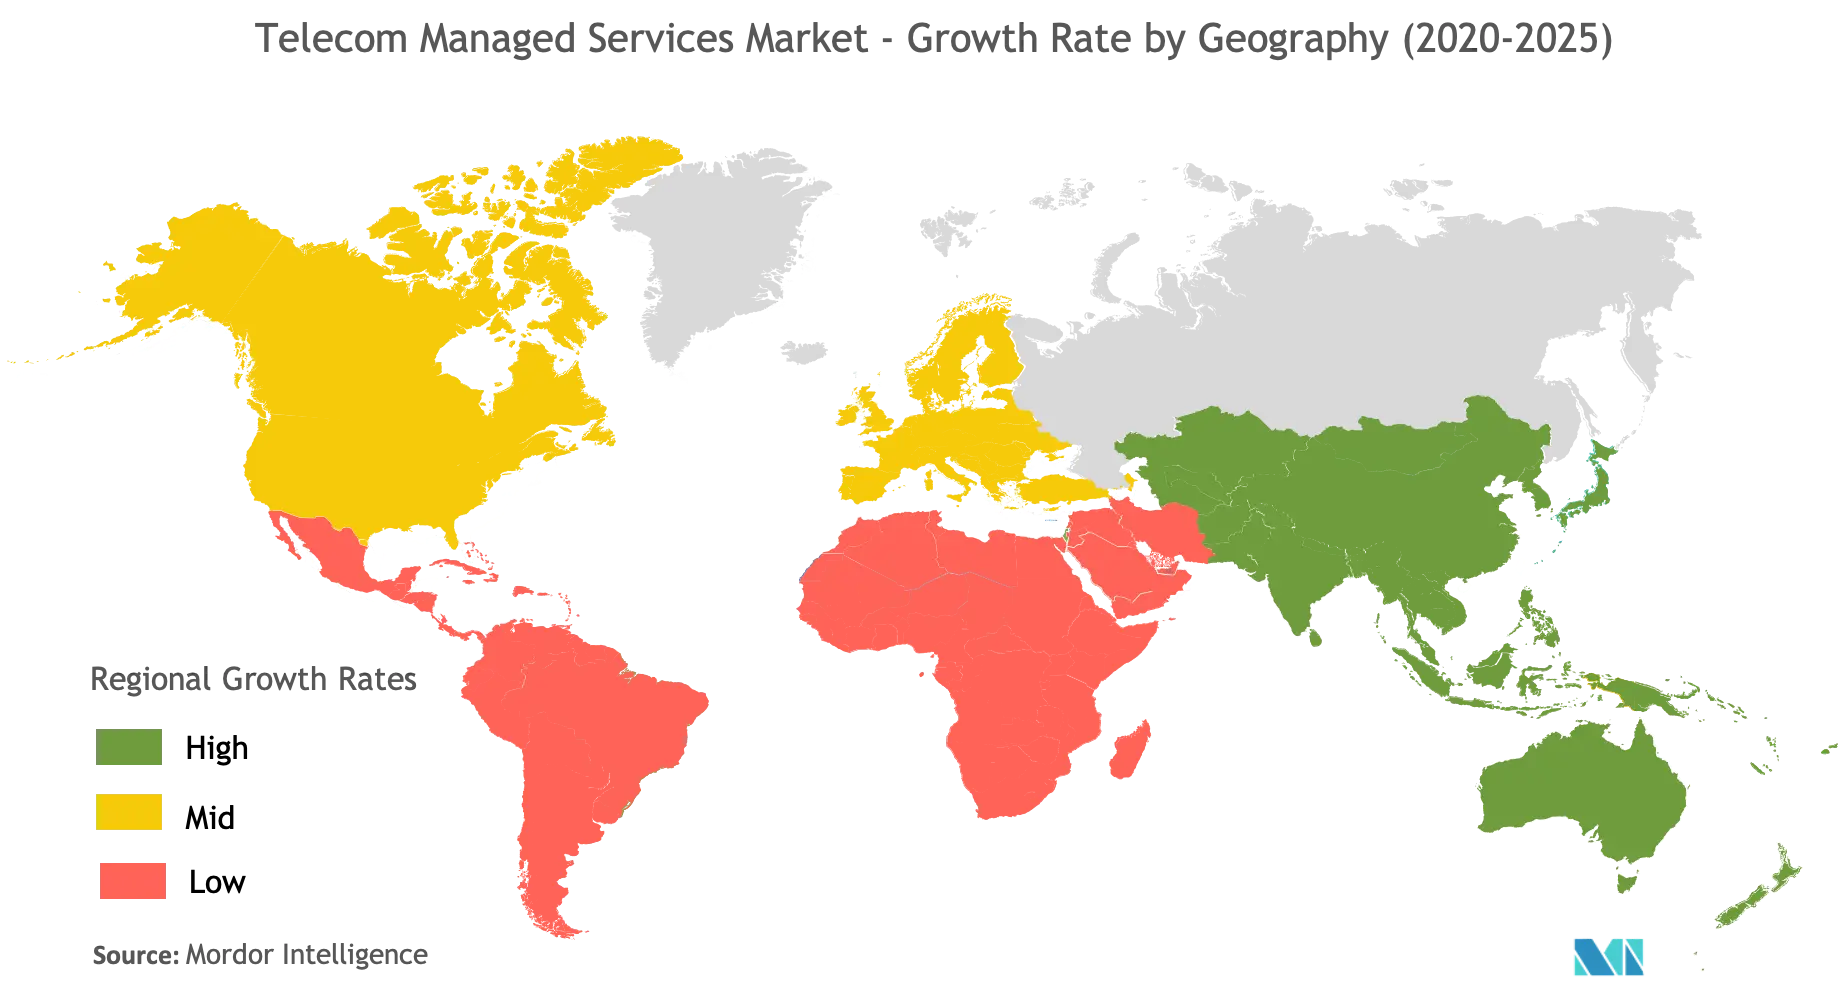 Telecom Managed Services Market Share